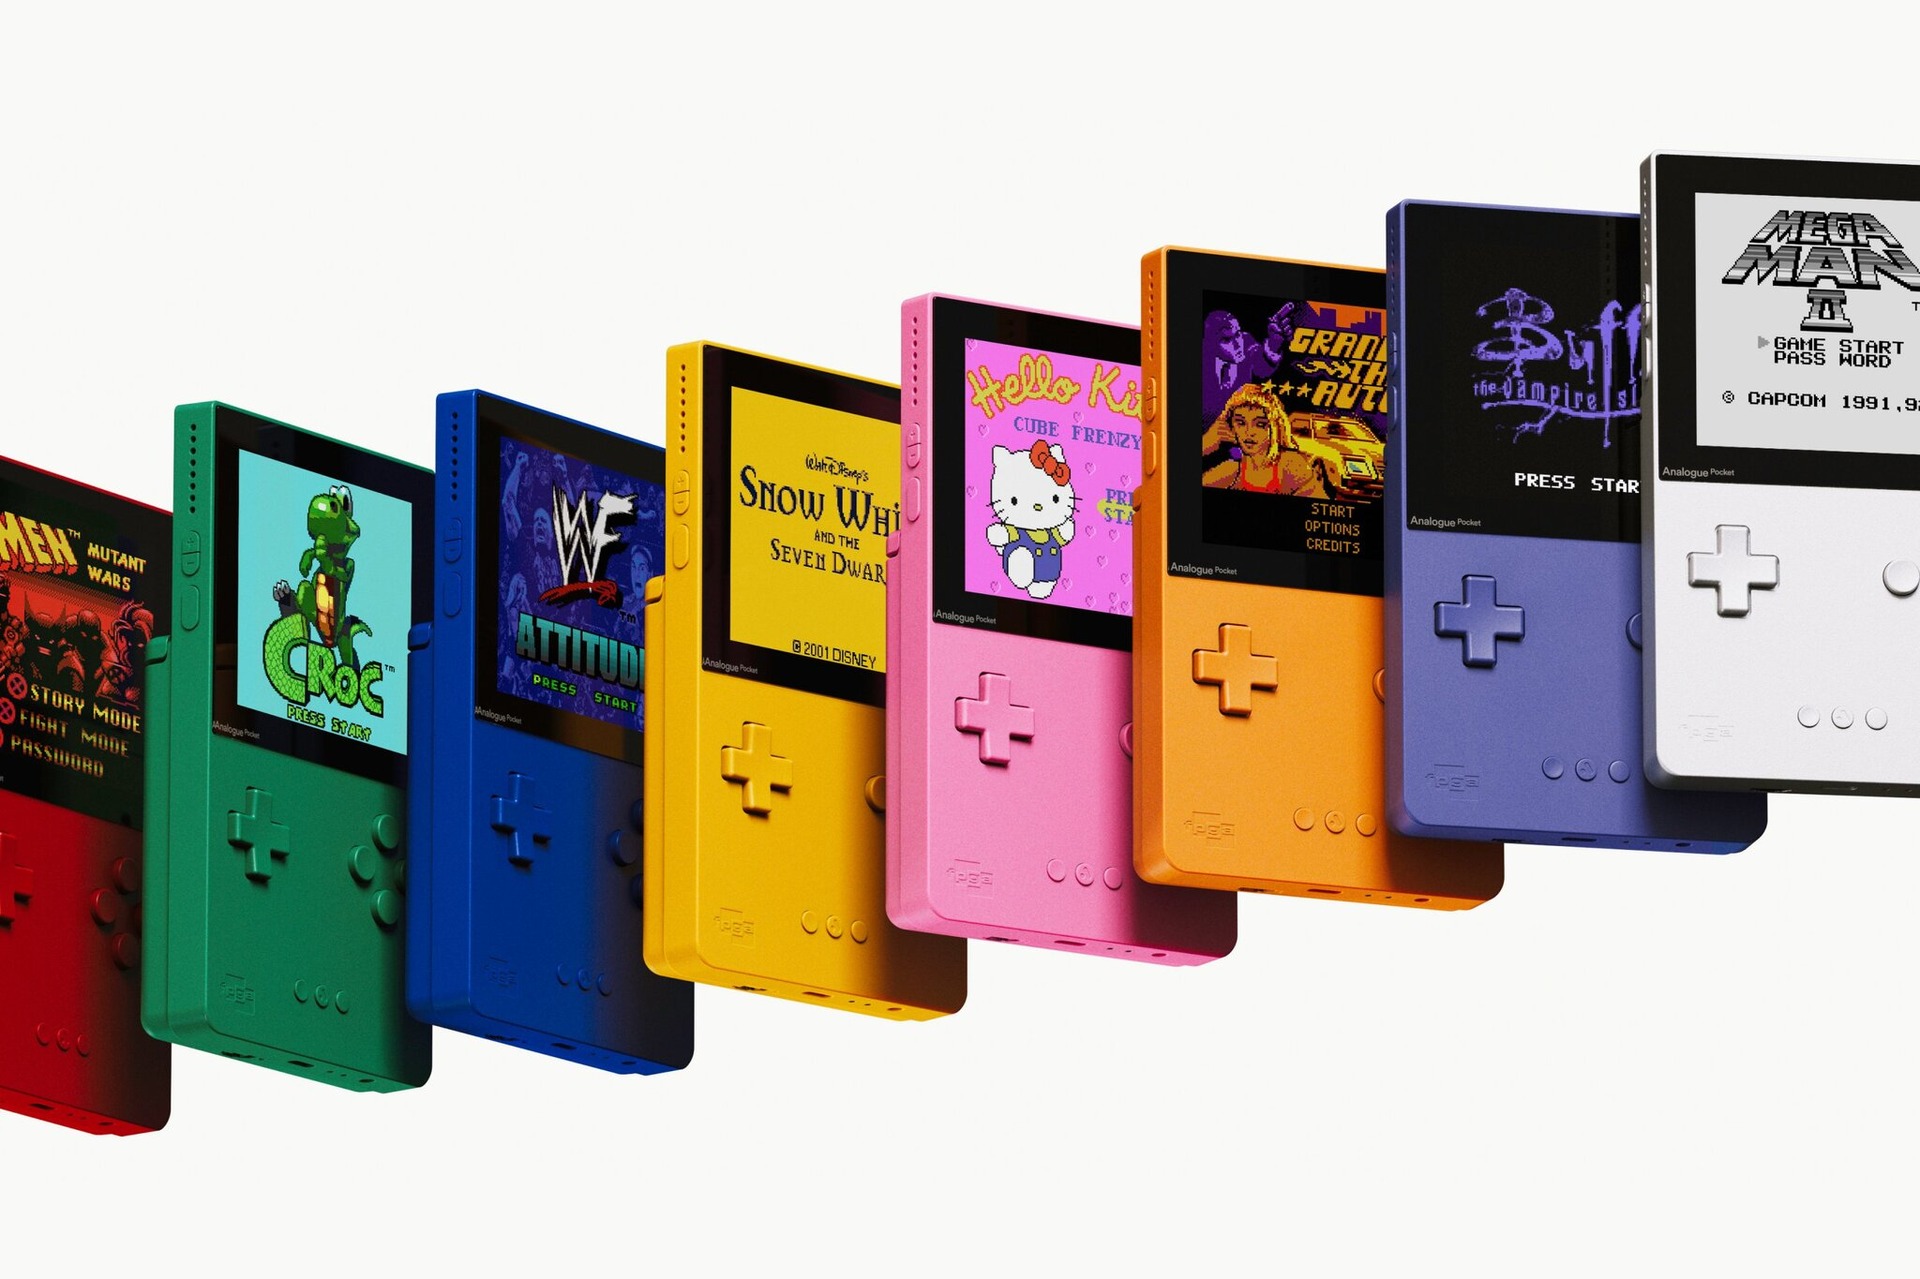 Analogue Pocket Purple アナログポケット 限定色 紫 - Nintendo Switch